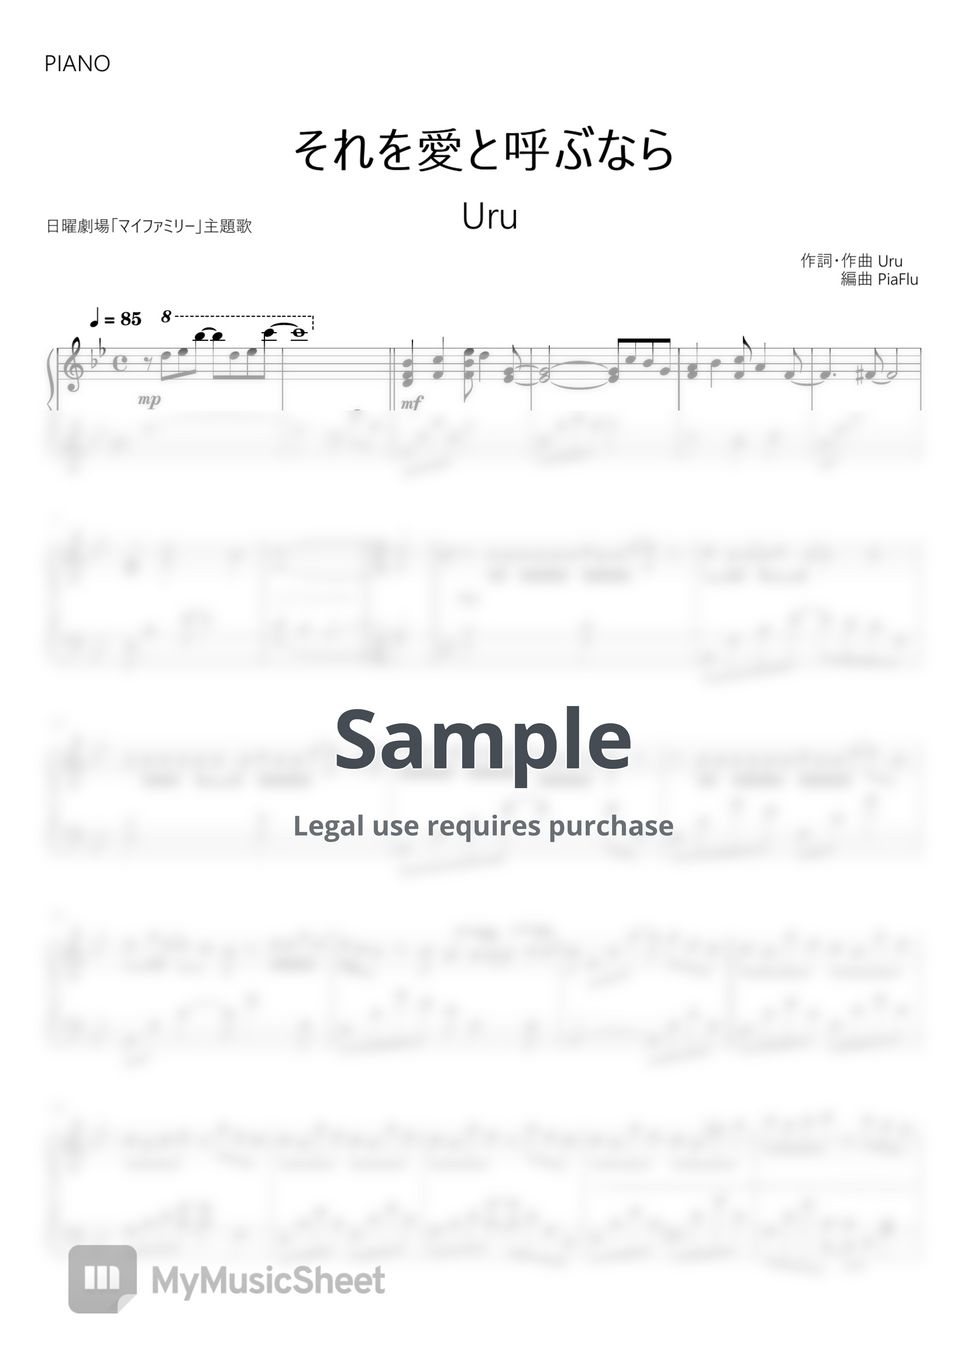 Uru - それを愛と呼ぶなら / Uru - Soreo Aito yobunara (Piano) by PiaFlu / ピアフル Piano&Flute